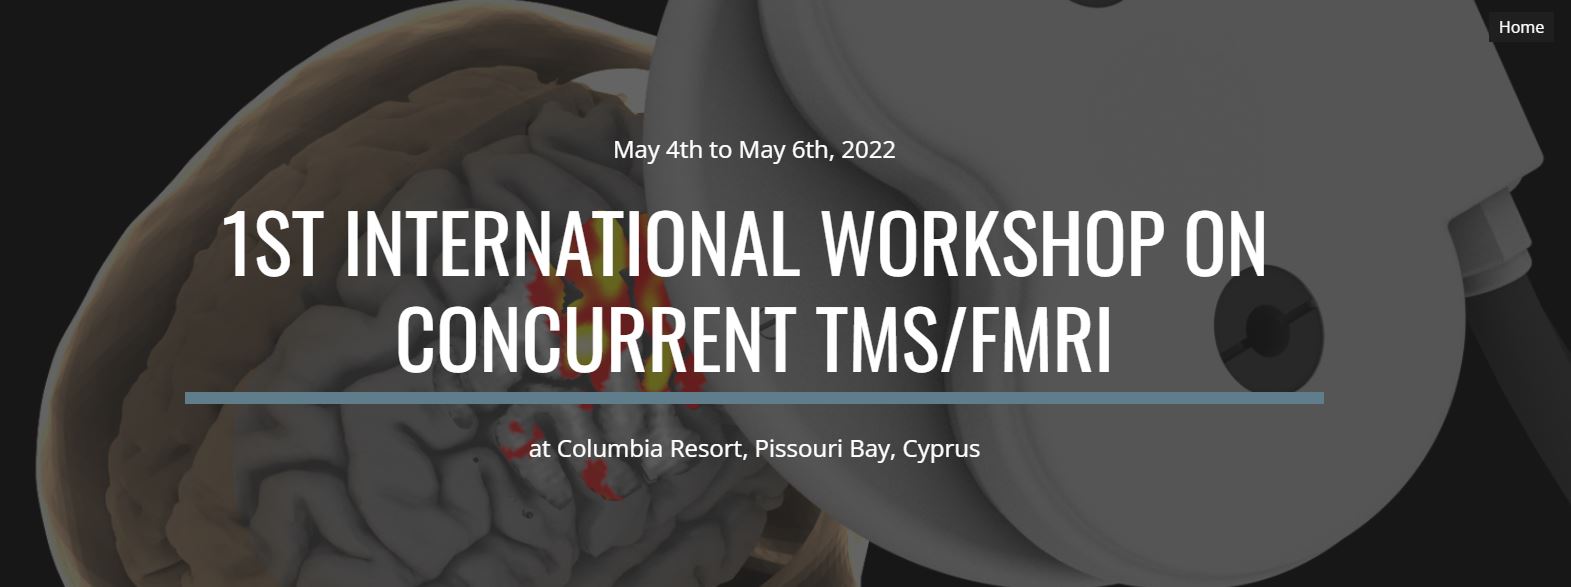 First International Workshop on Concurrent TMS-fMRI